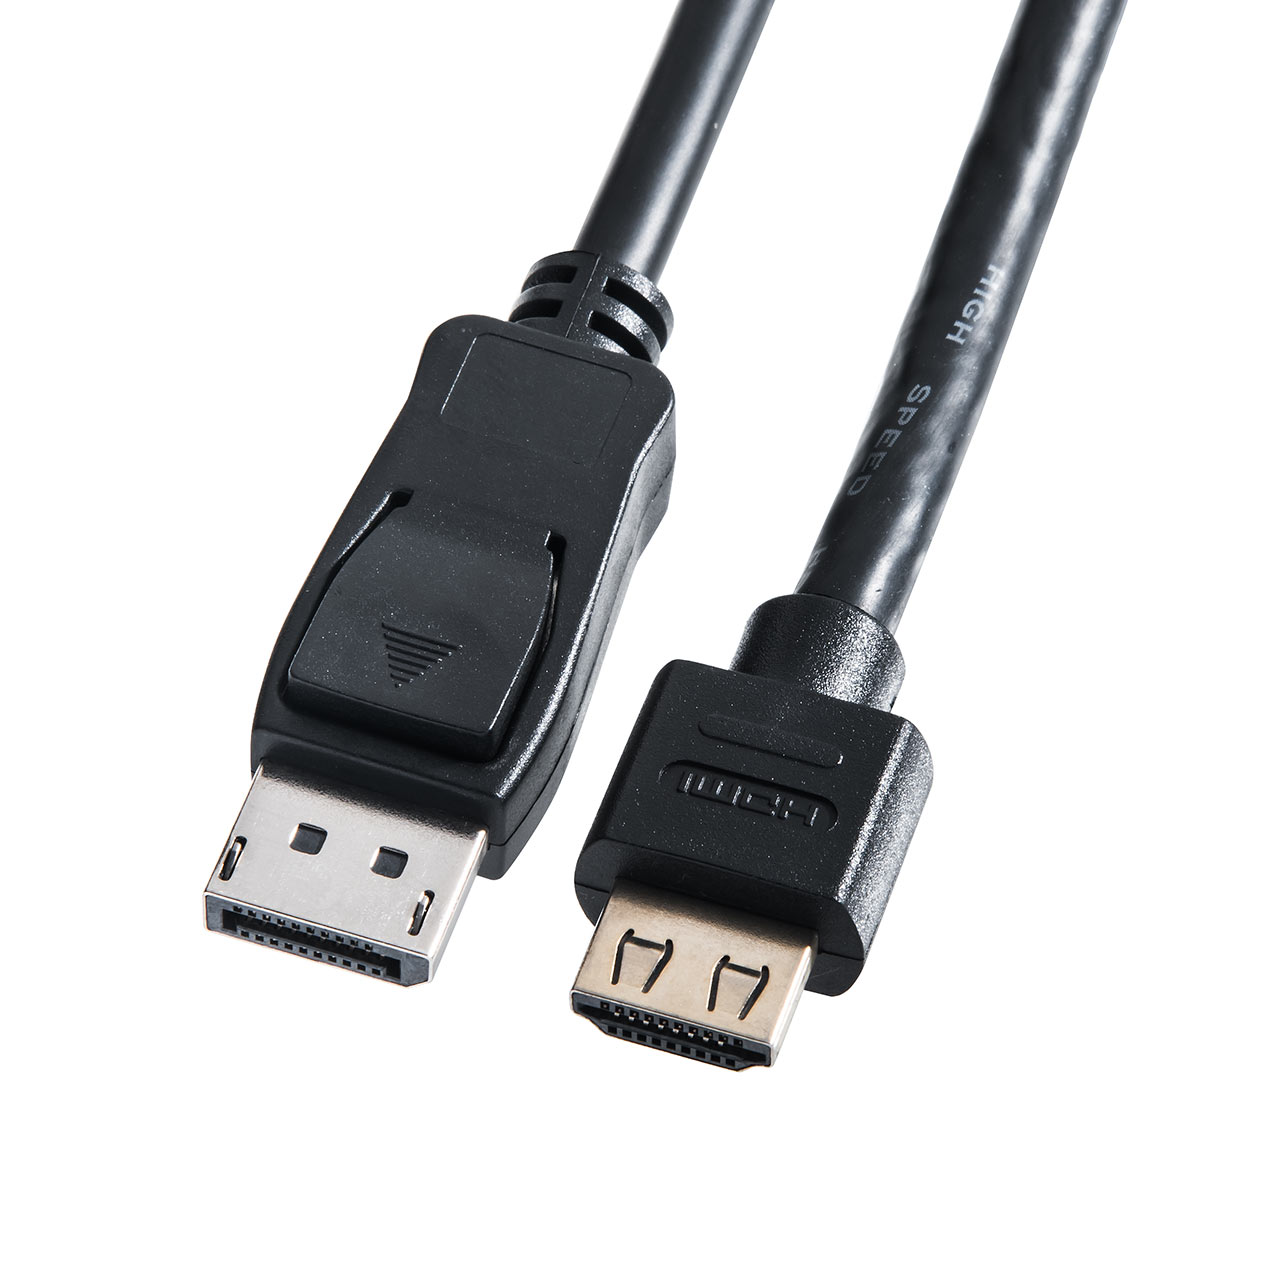 DisplayPort-HDMIϊP[u(5mE4K/60HzΉEANeBu^CvEDisplayPortEHDMIϊE4Ko͉\Eb`j 500-KC021-5